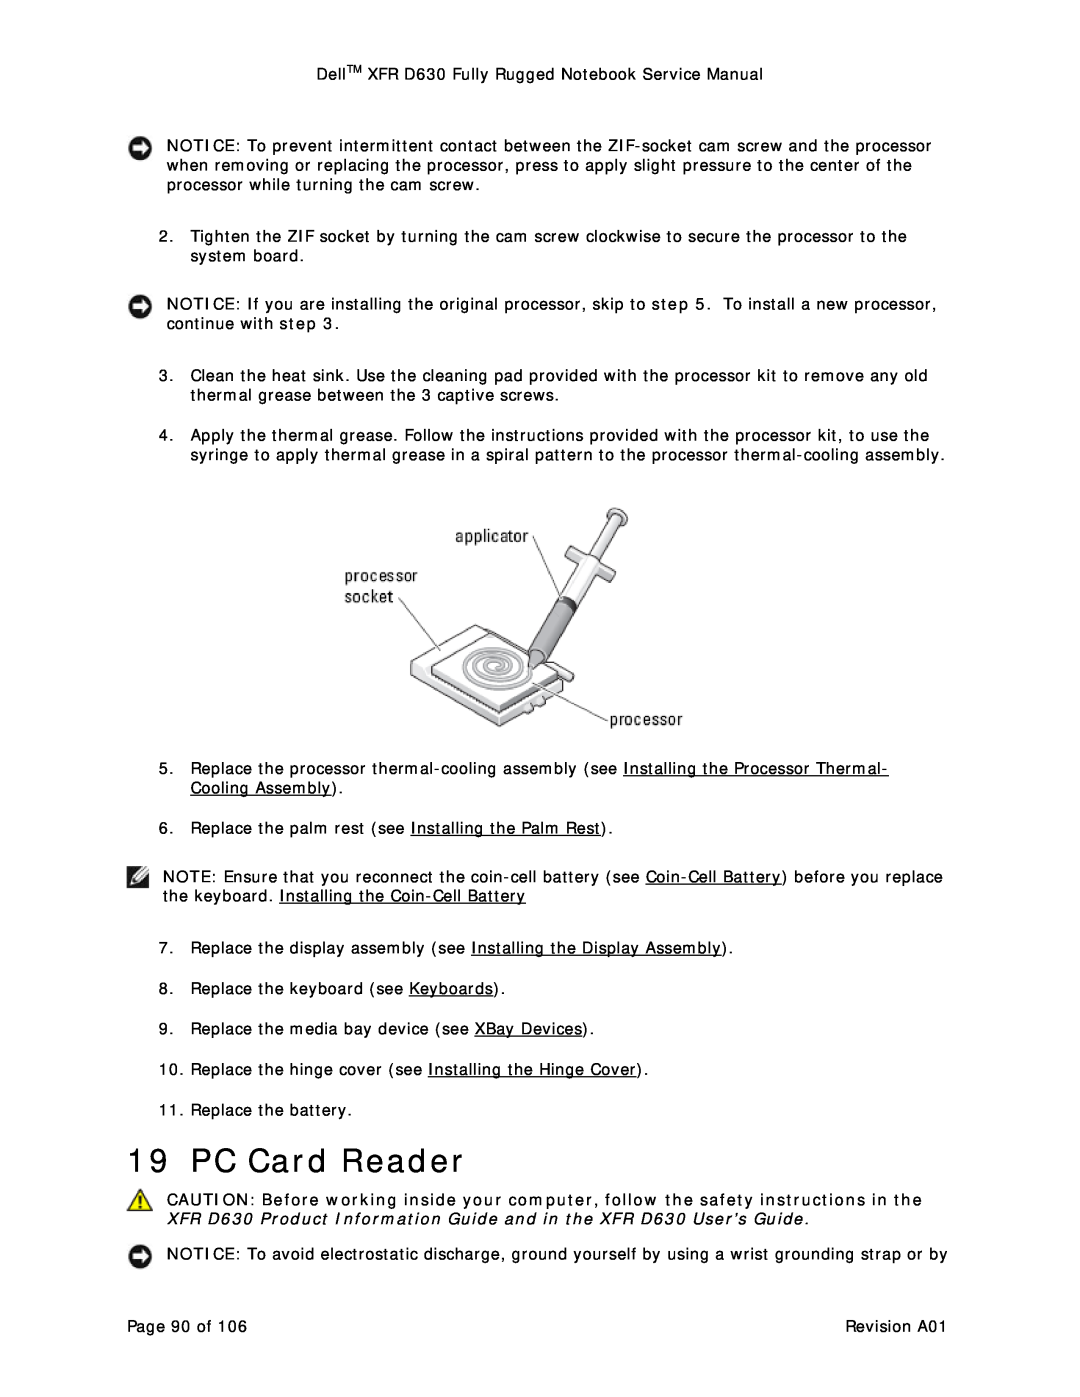 Dell D630 service manual PC Card Reader 